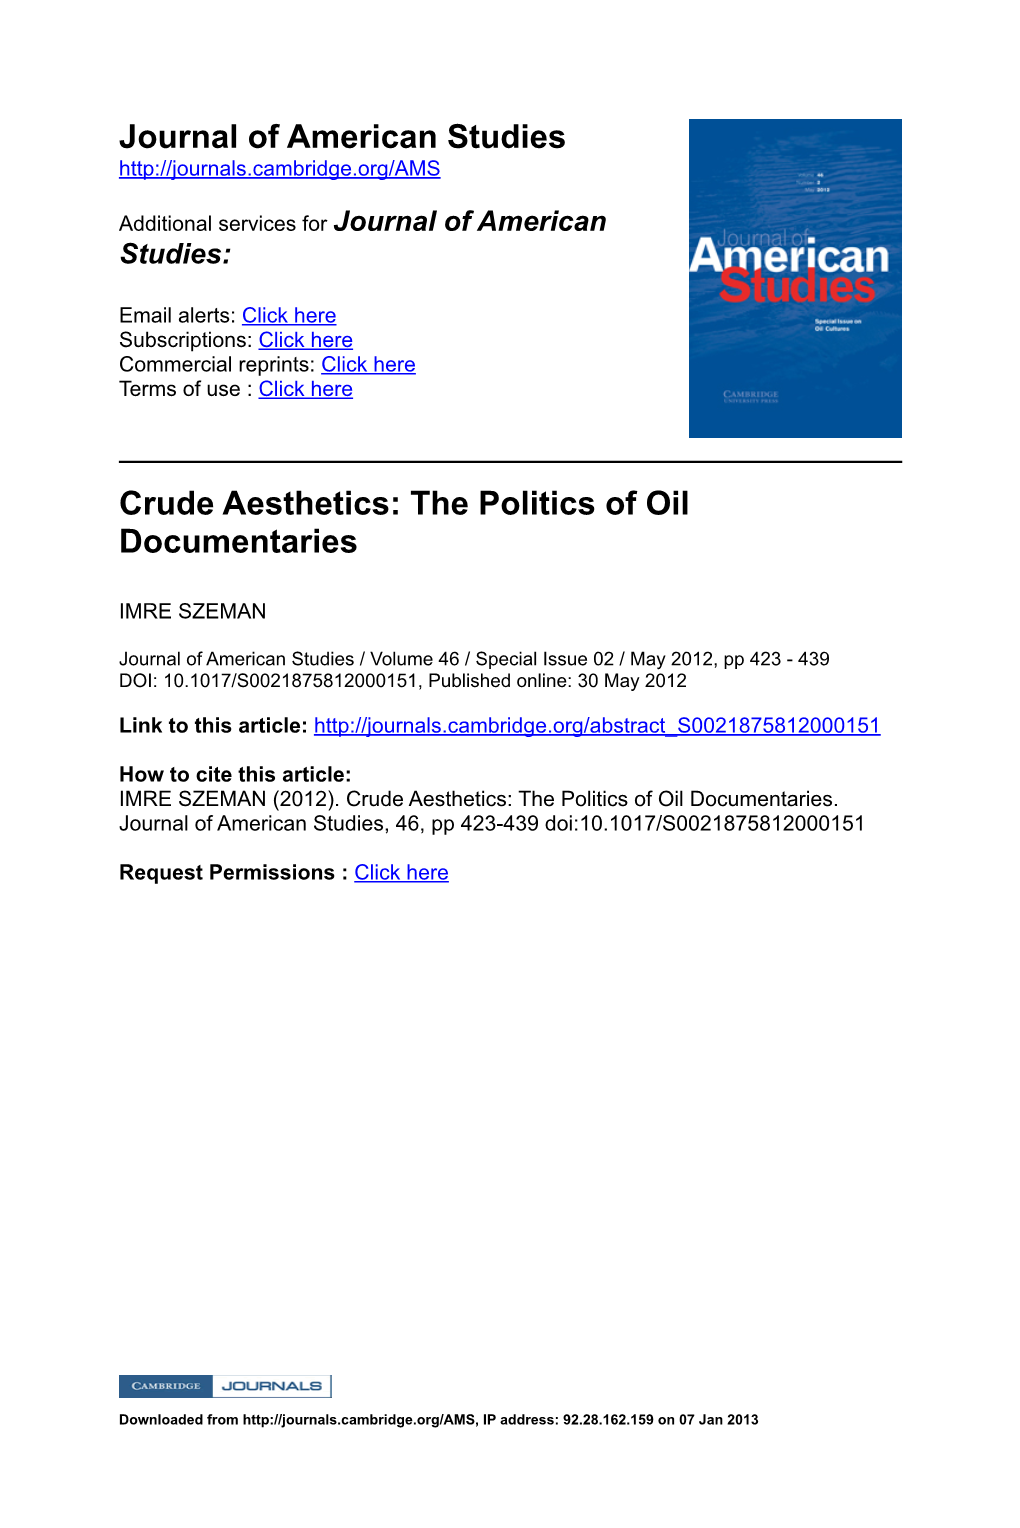 Journal of American Studies Crude Aesthetics: the Politics of Oil